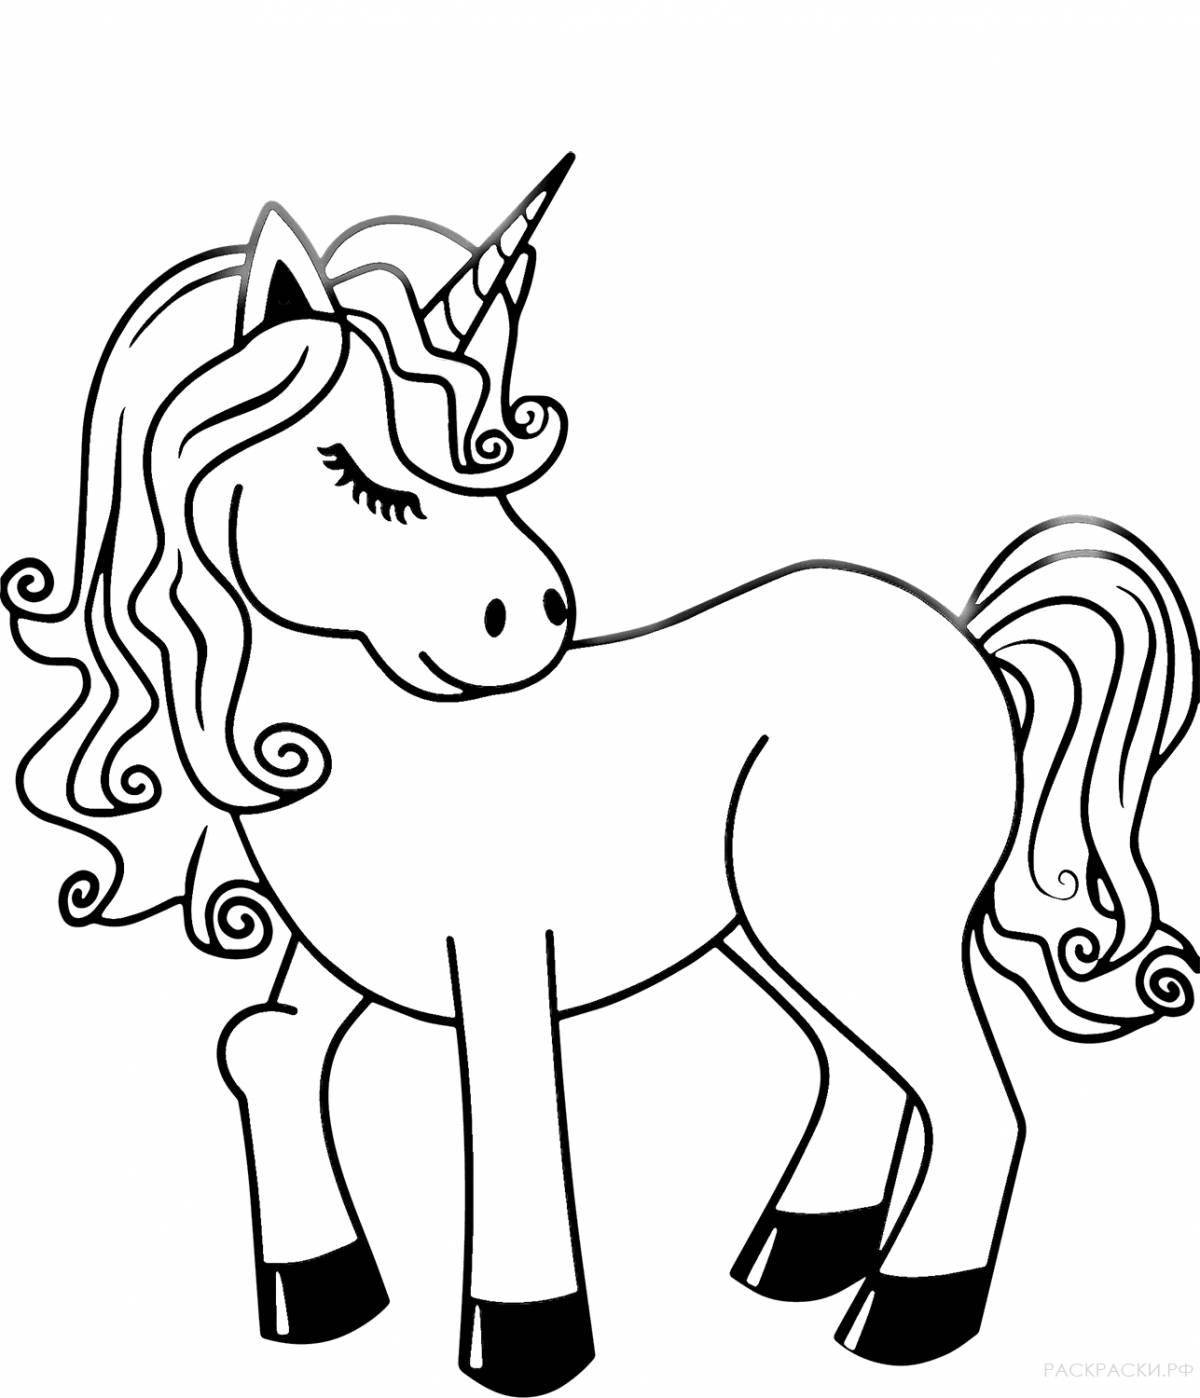 Magic unicorn drawing for kids